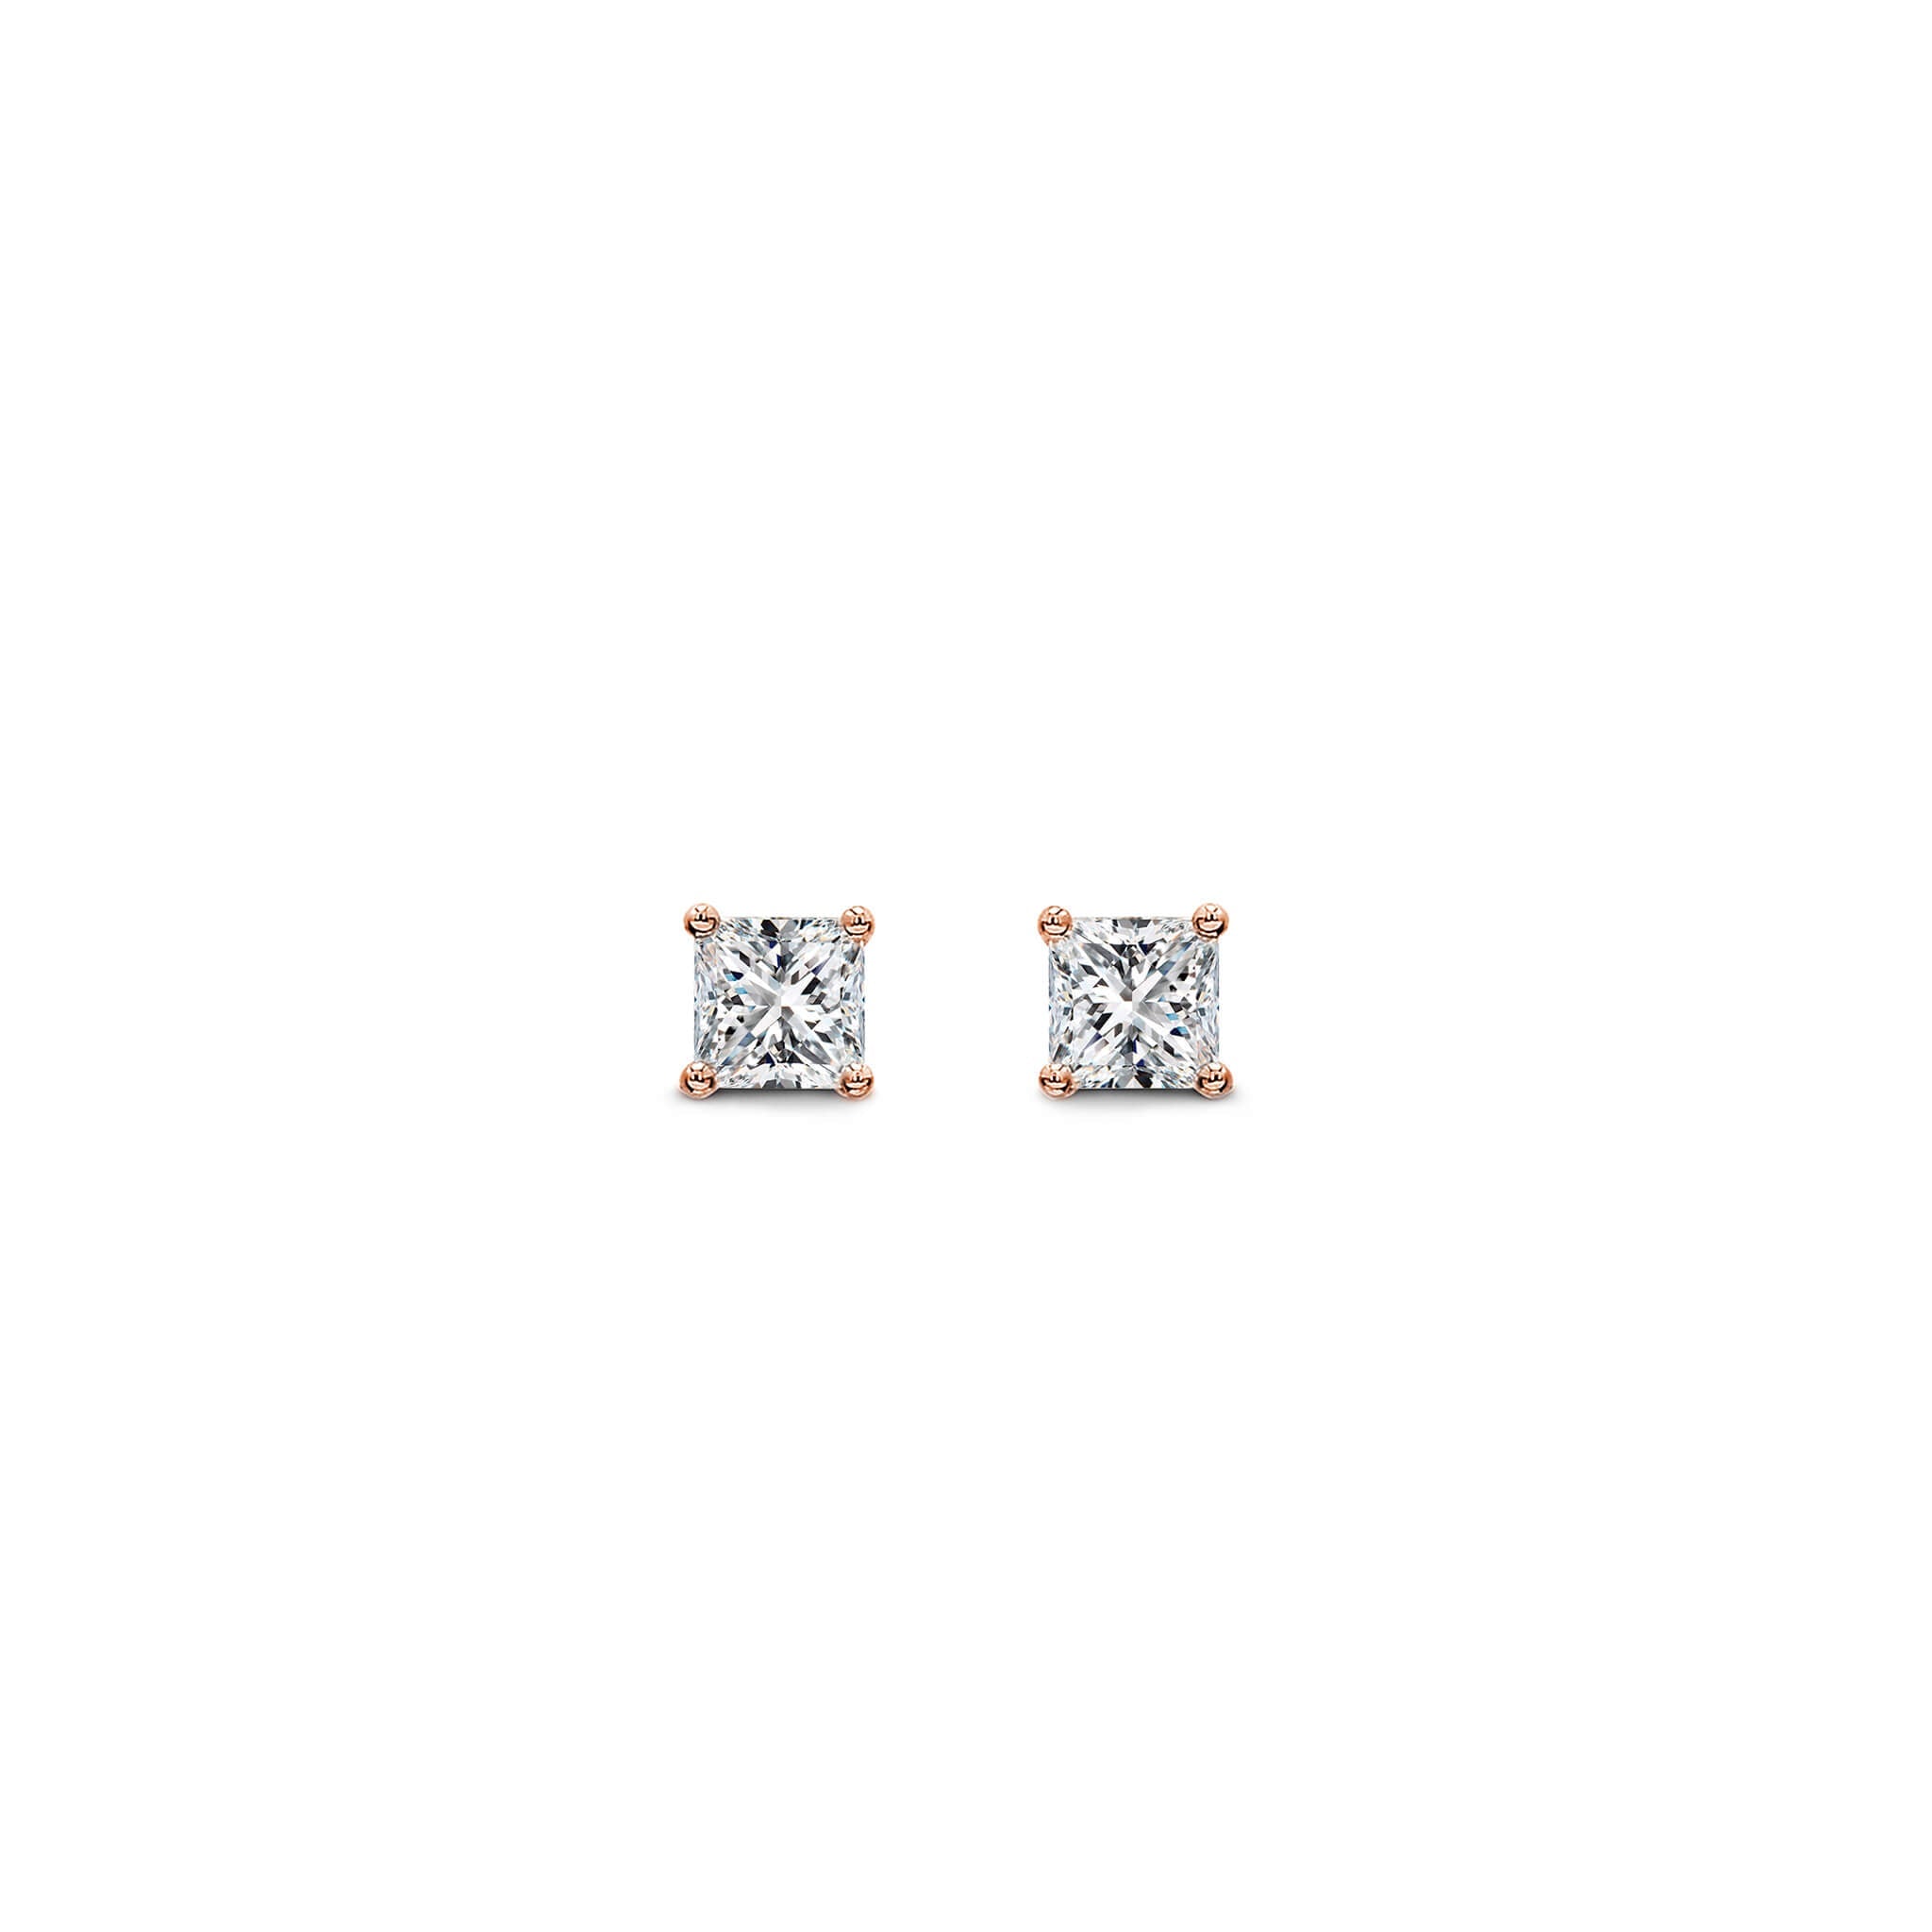 My Girl Diamond Earrings Front View - SHIMANSKY.CO.ZA